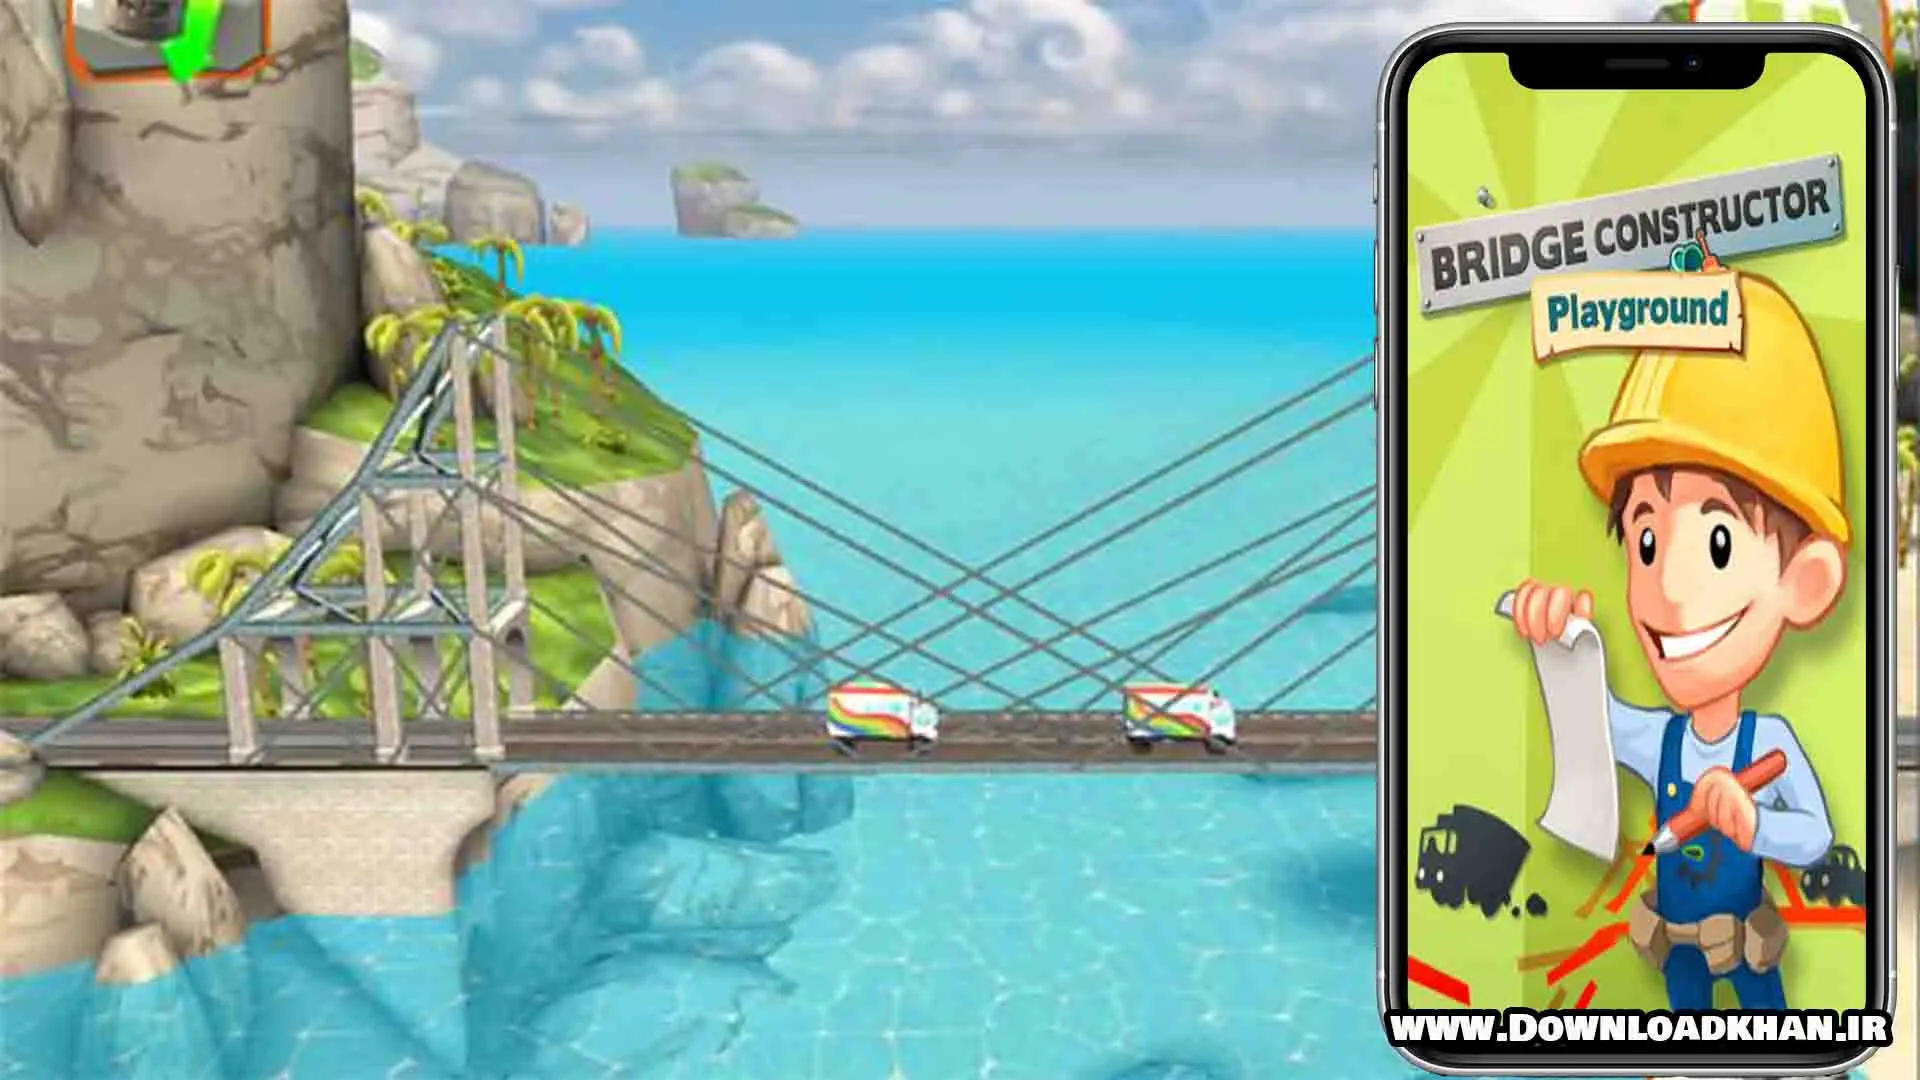 Bridge Constructor Playground FREE(Downloadkhan.ir)